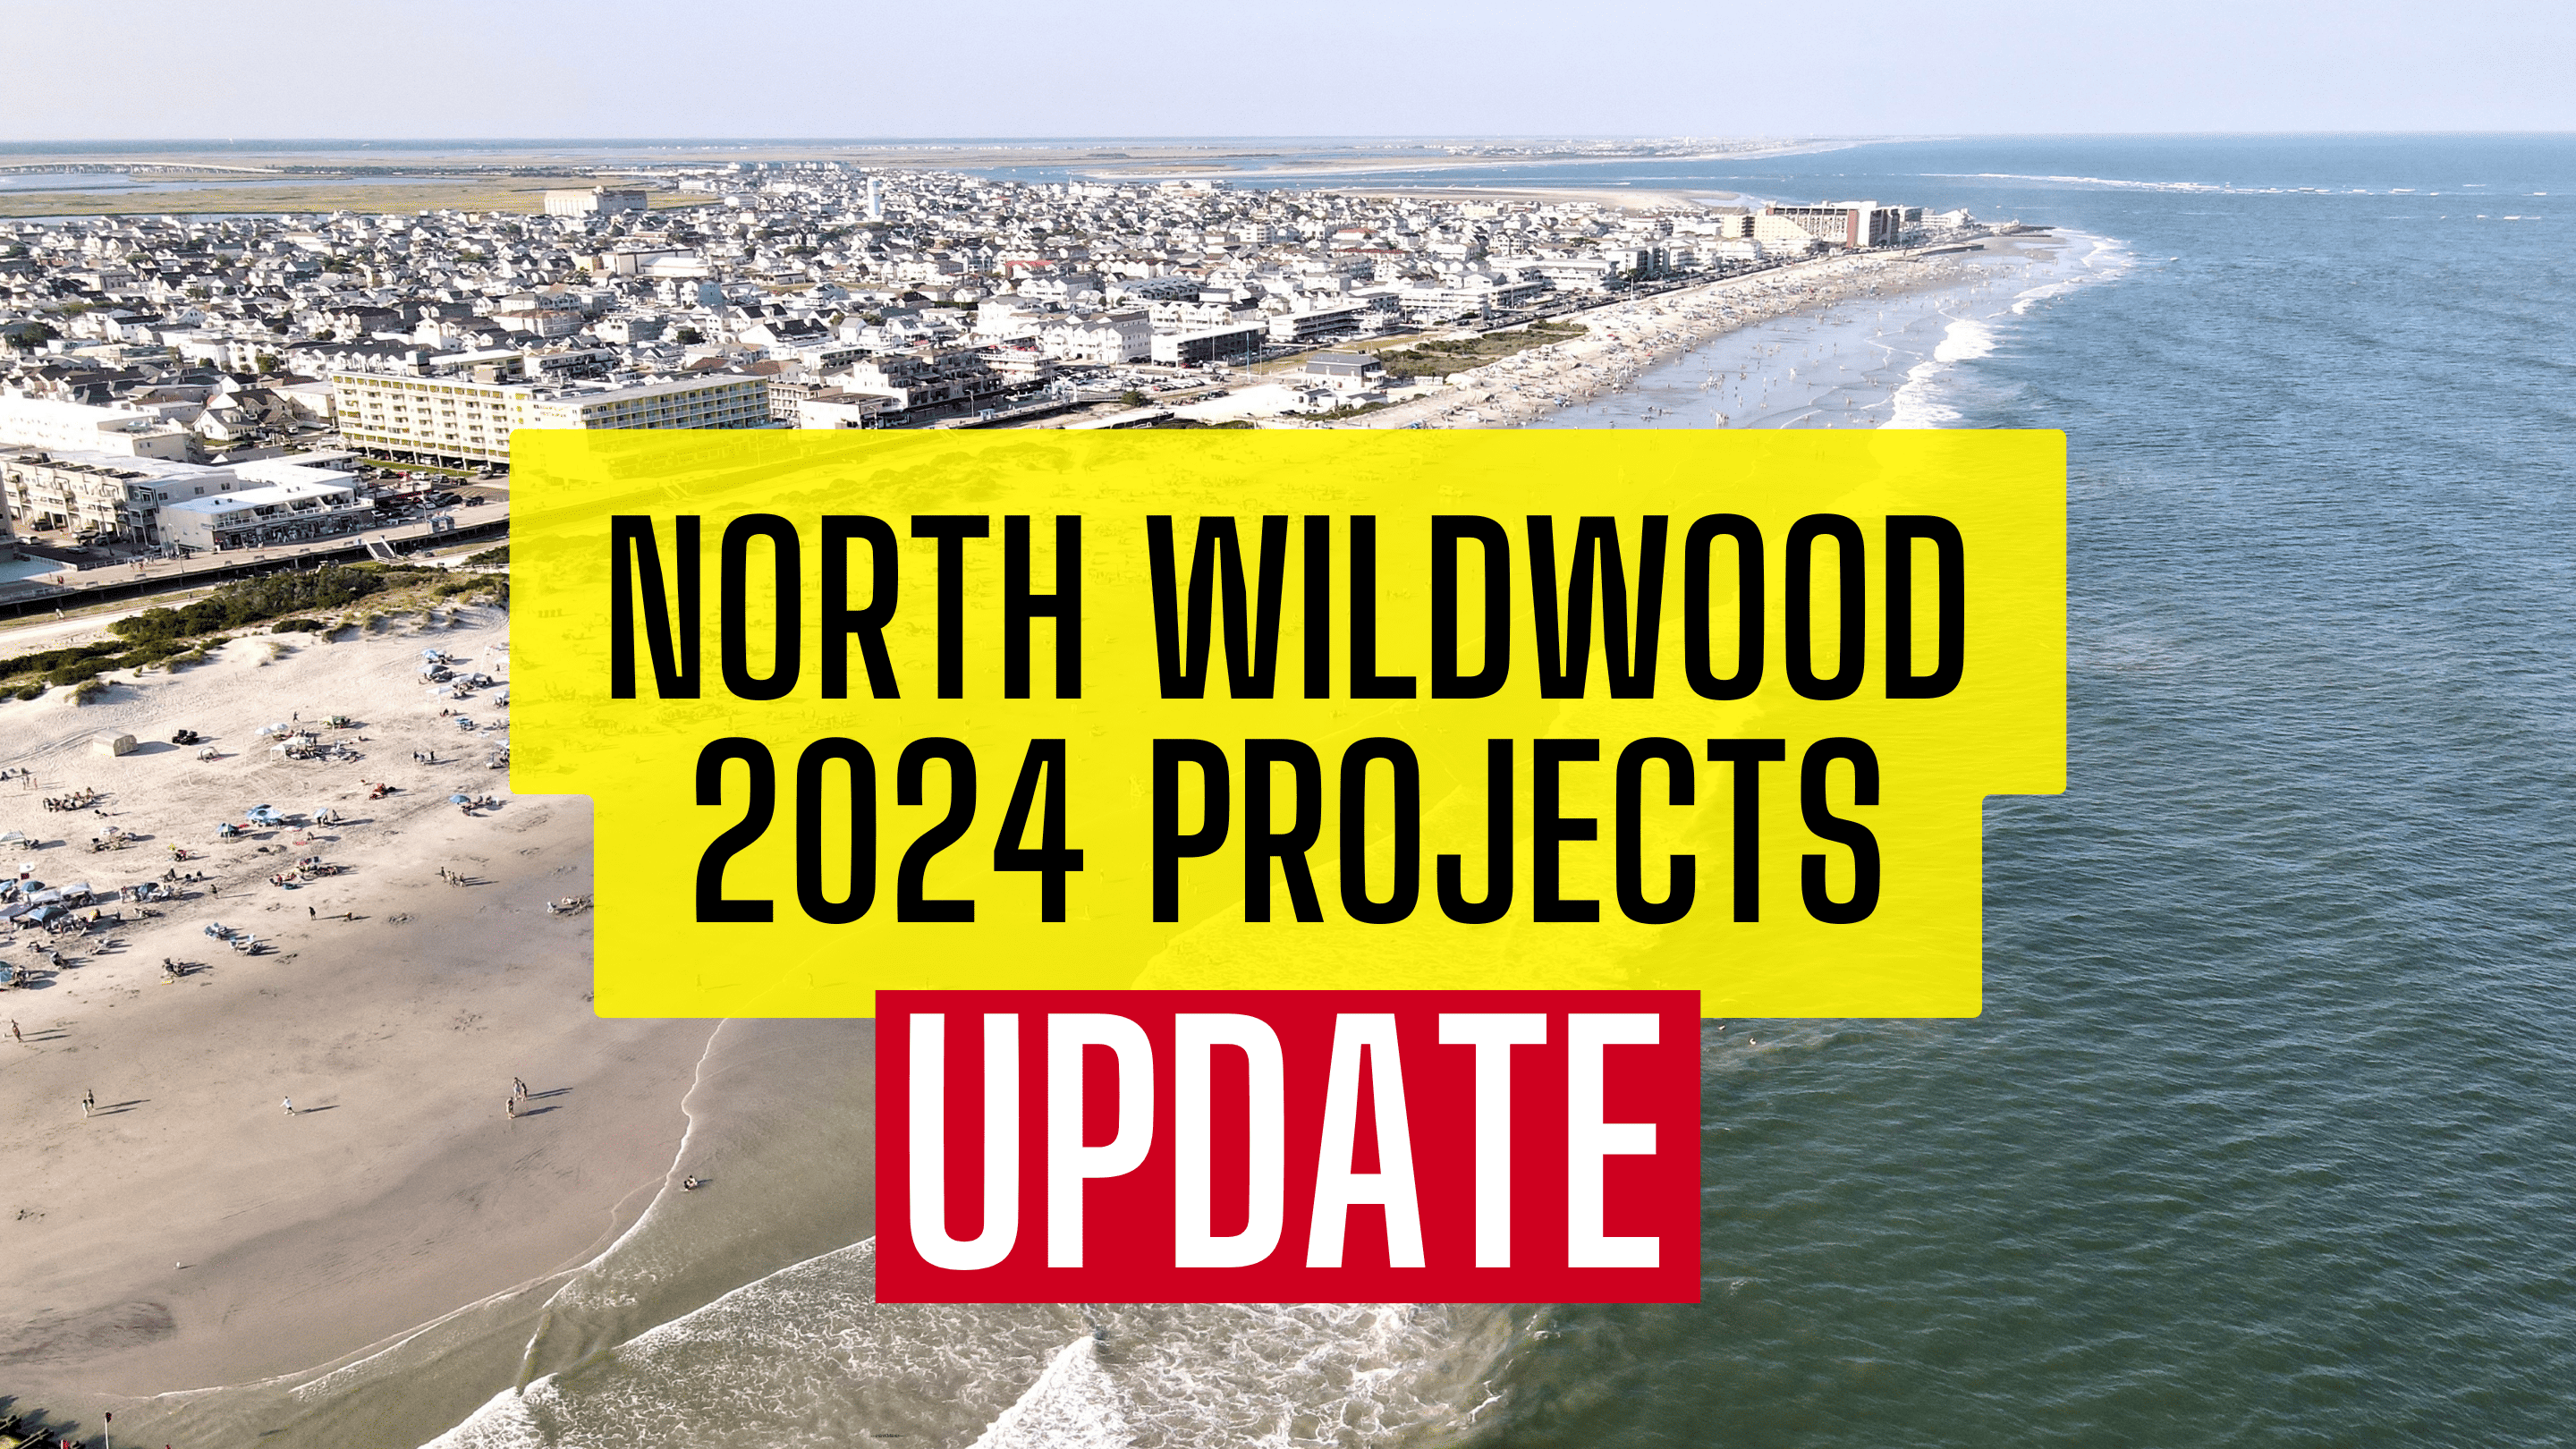 North Wildwood 2024 Project Updates